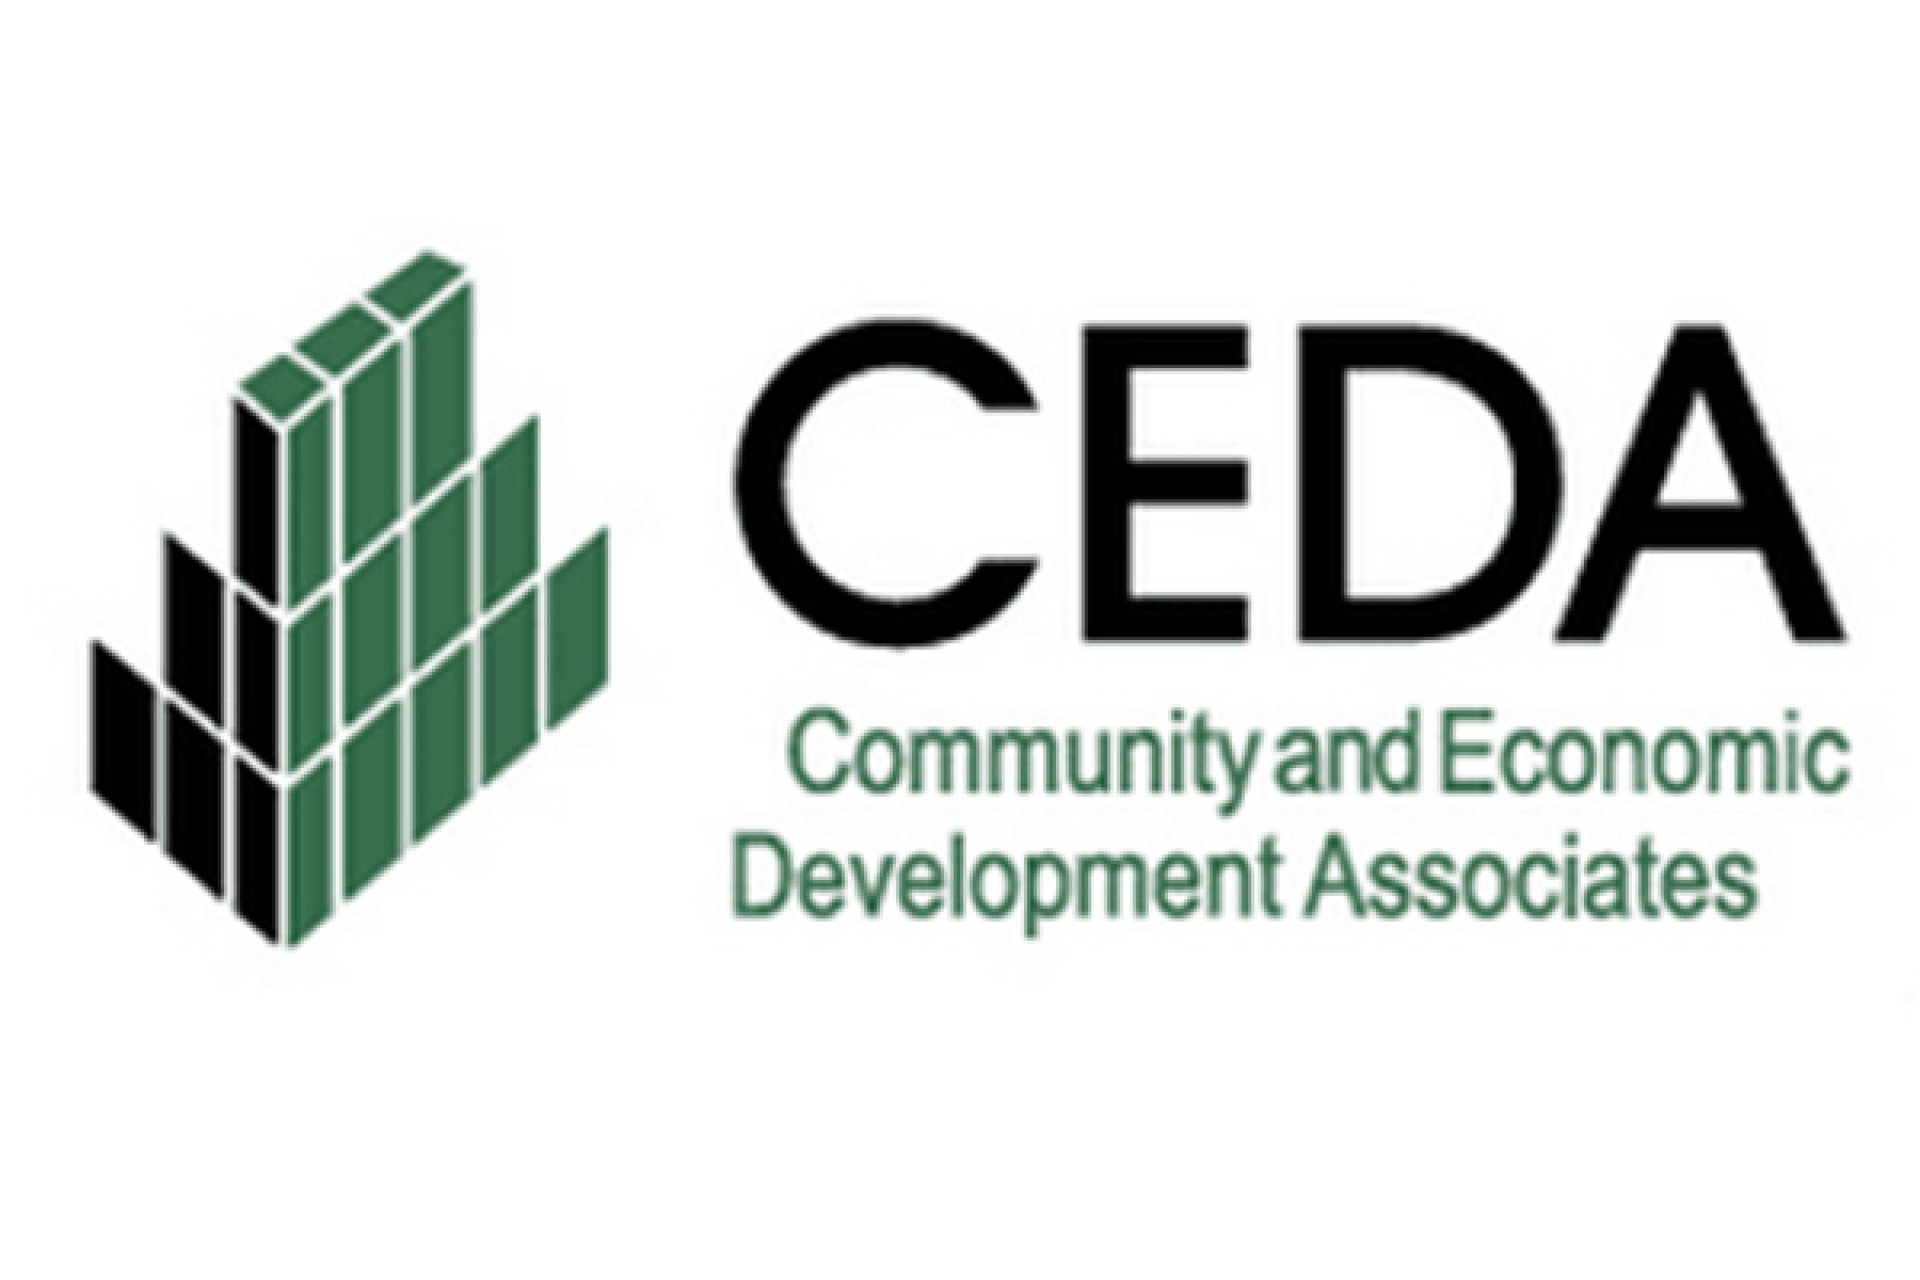 CEDA Community and Economic Development Associates